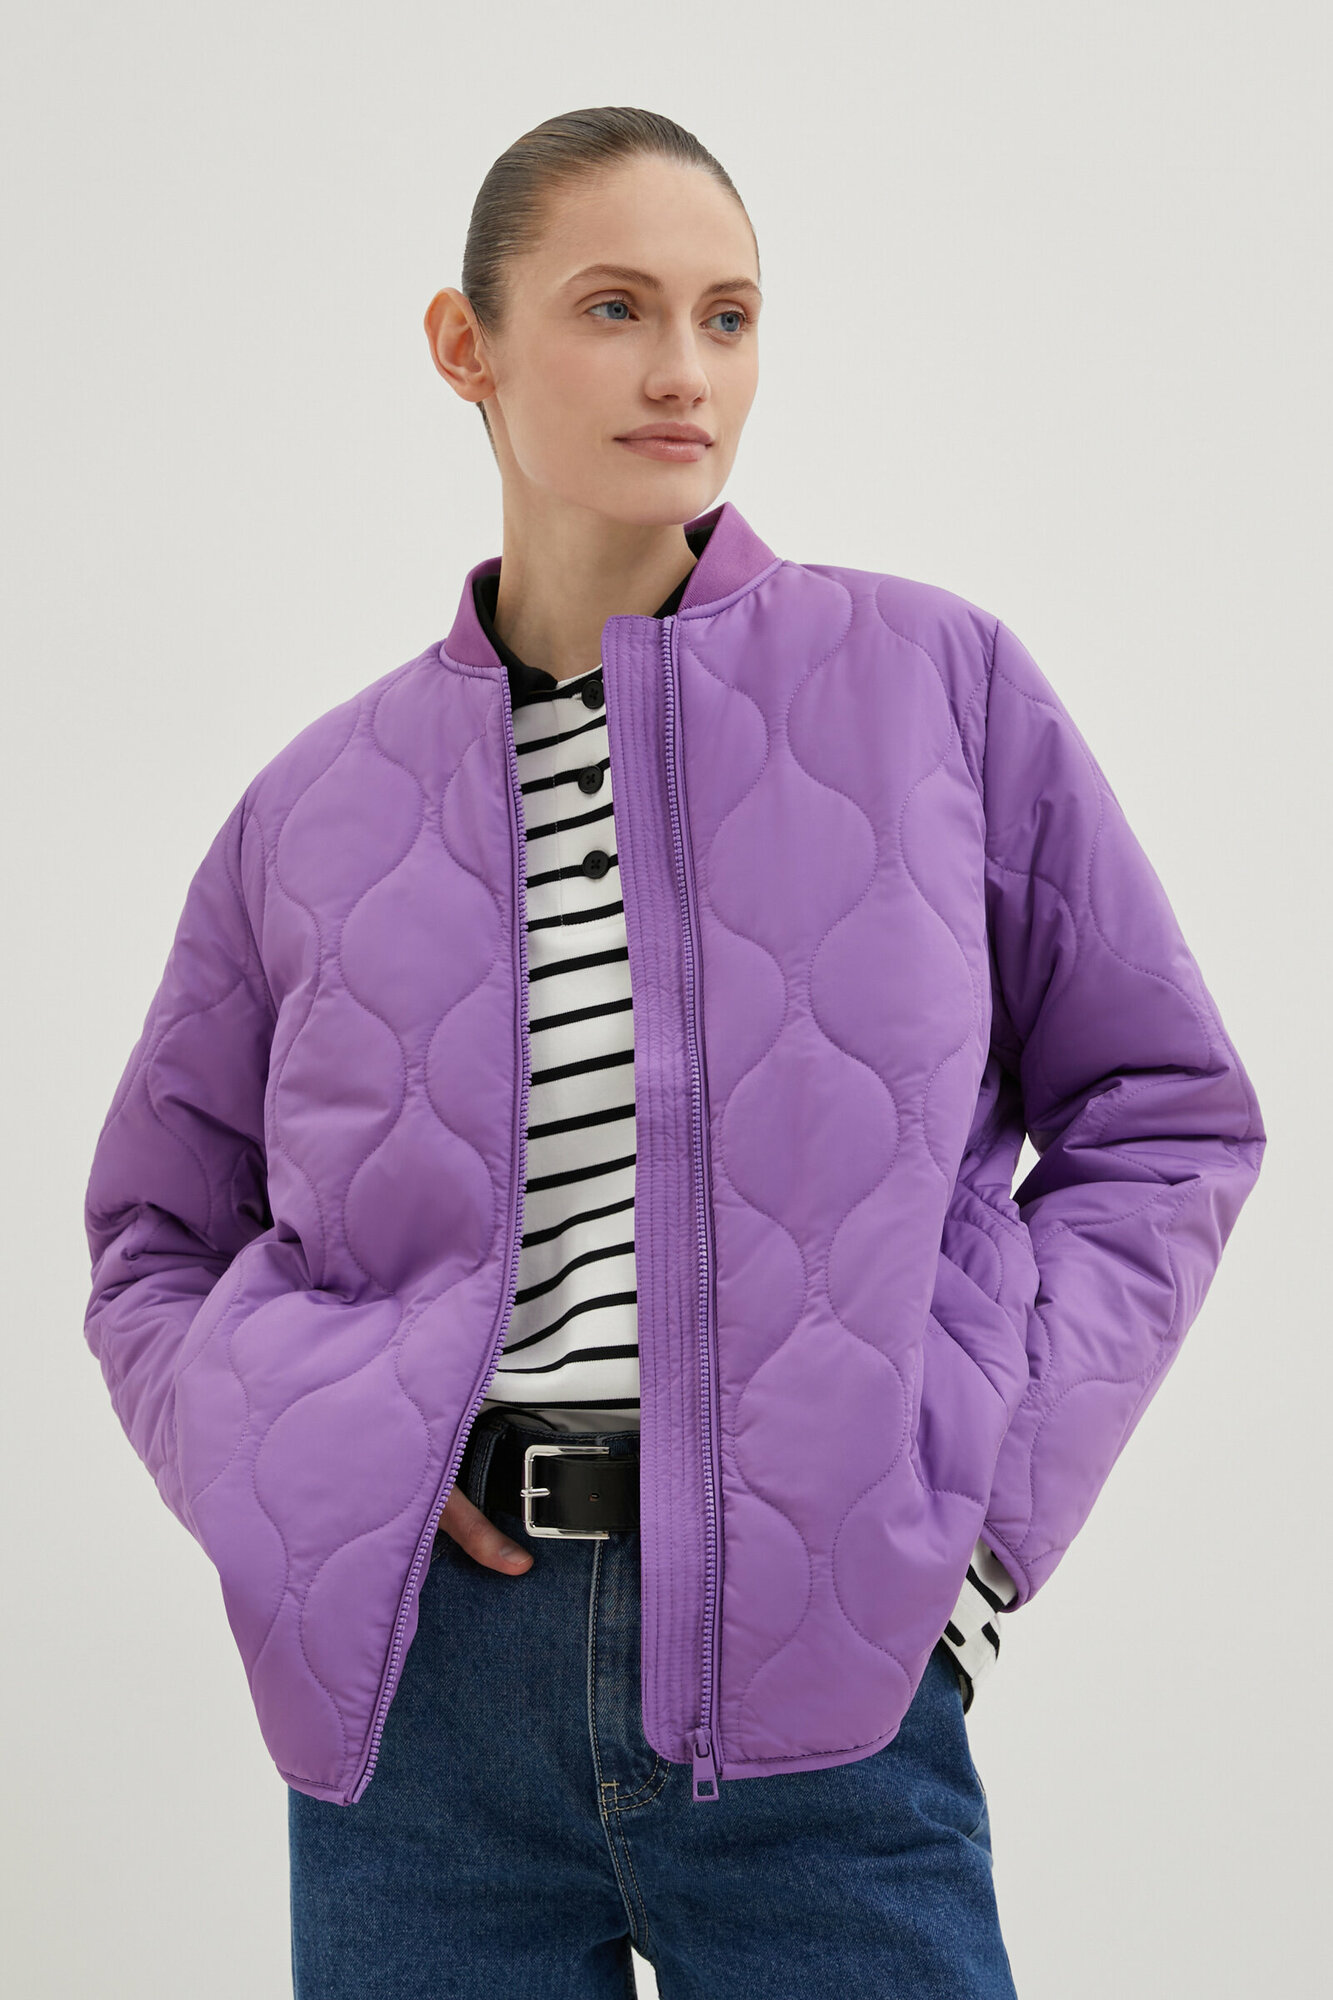 Куртка женская Finn Flare цвет: фиолетовый BAS-100119_820 XS